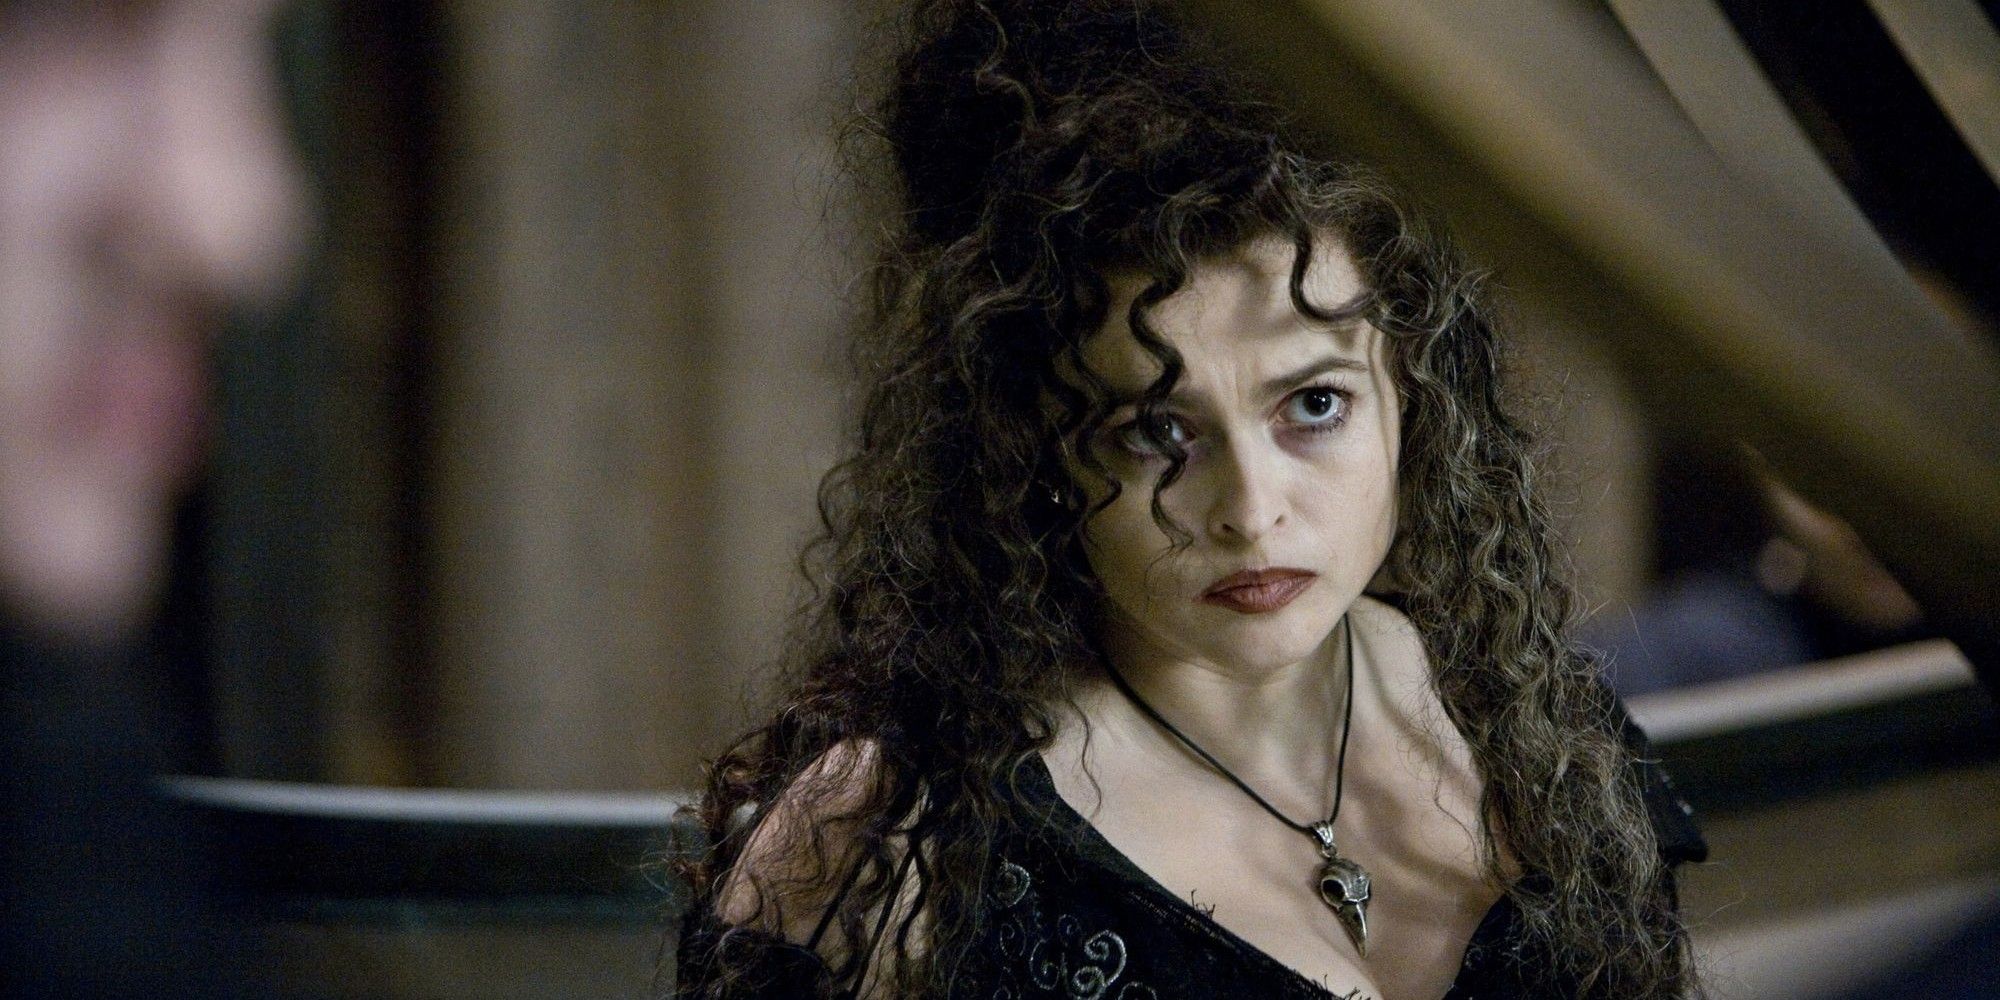 Helena Bonham Carter as Bellatrix Lestrange in 'Harry Potter'